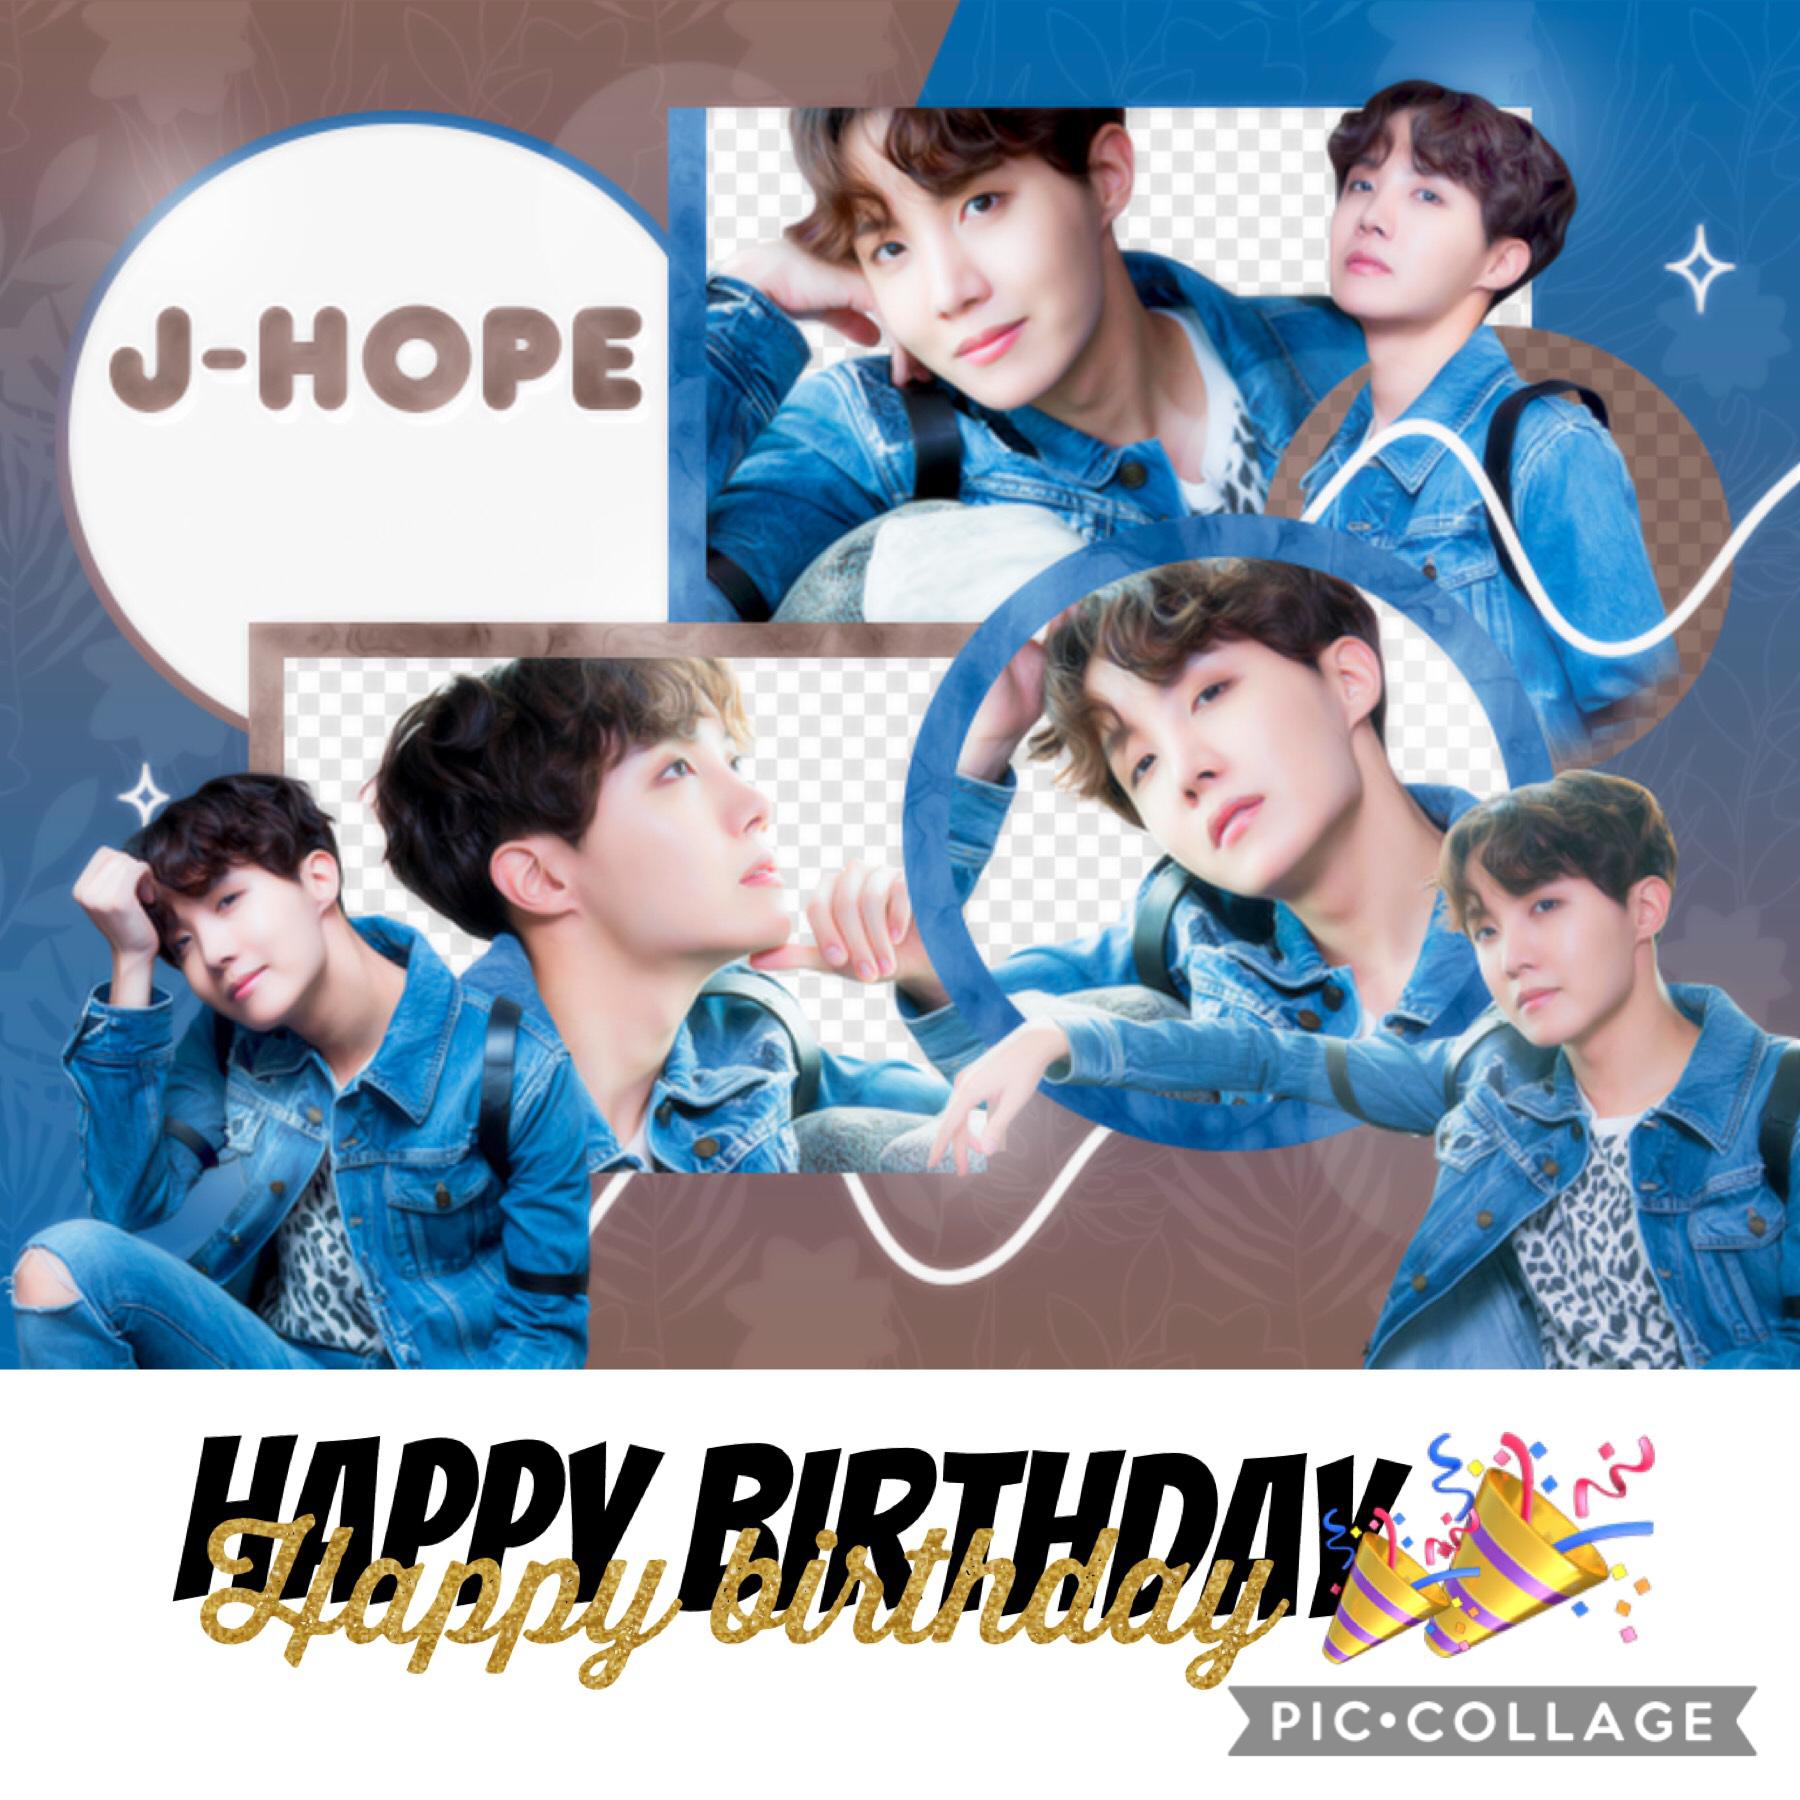 Happy birthday my j-hope 😭🤞❤️😭🤞❤️😭